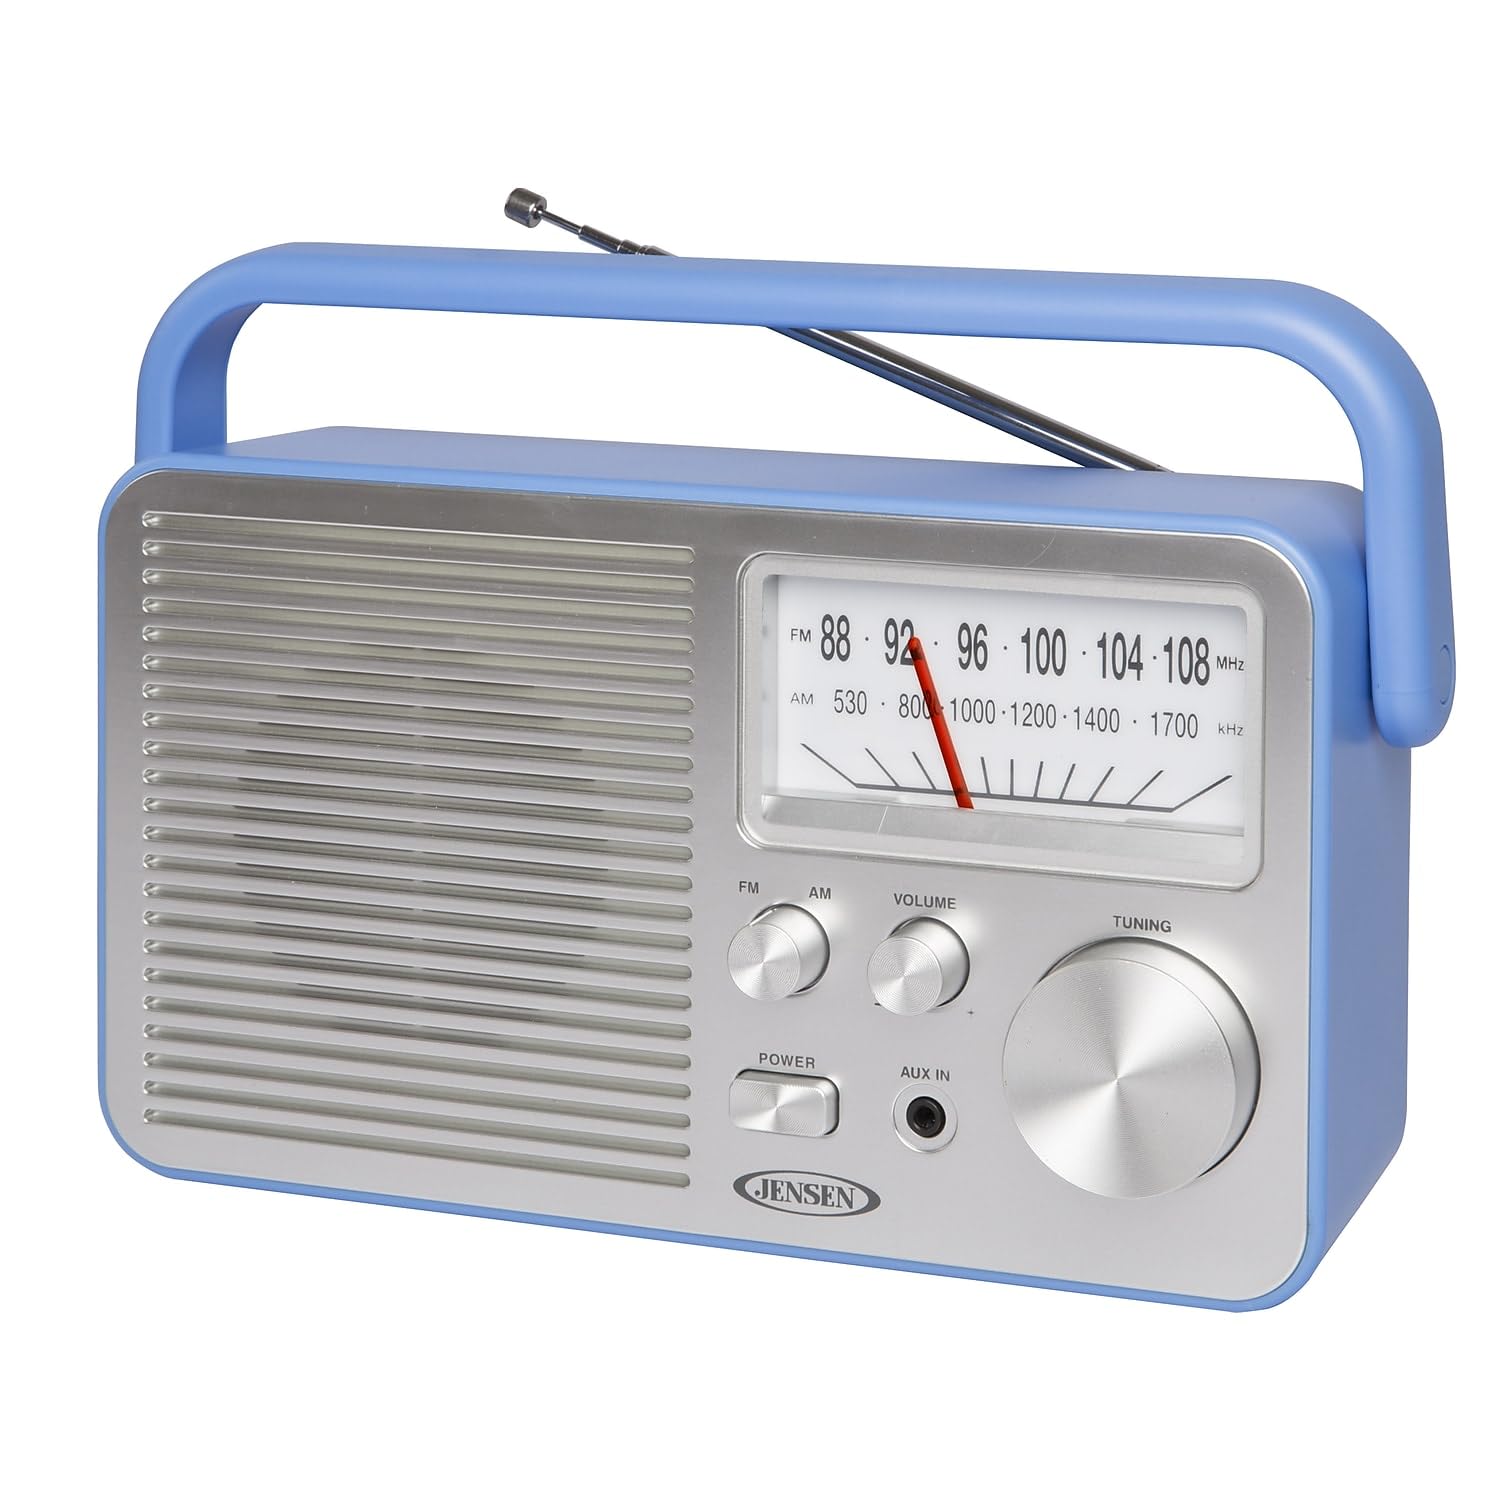 JENSEN MR-750BL BLUE PORTABLE AM/FM RADIO